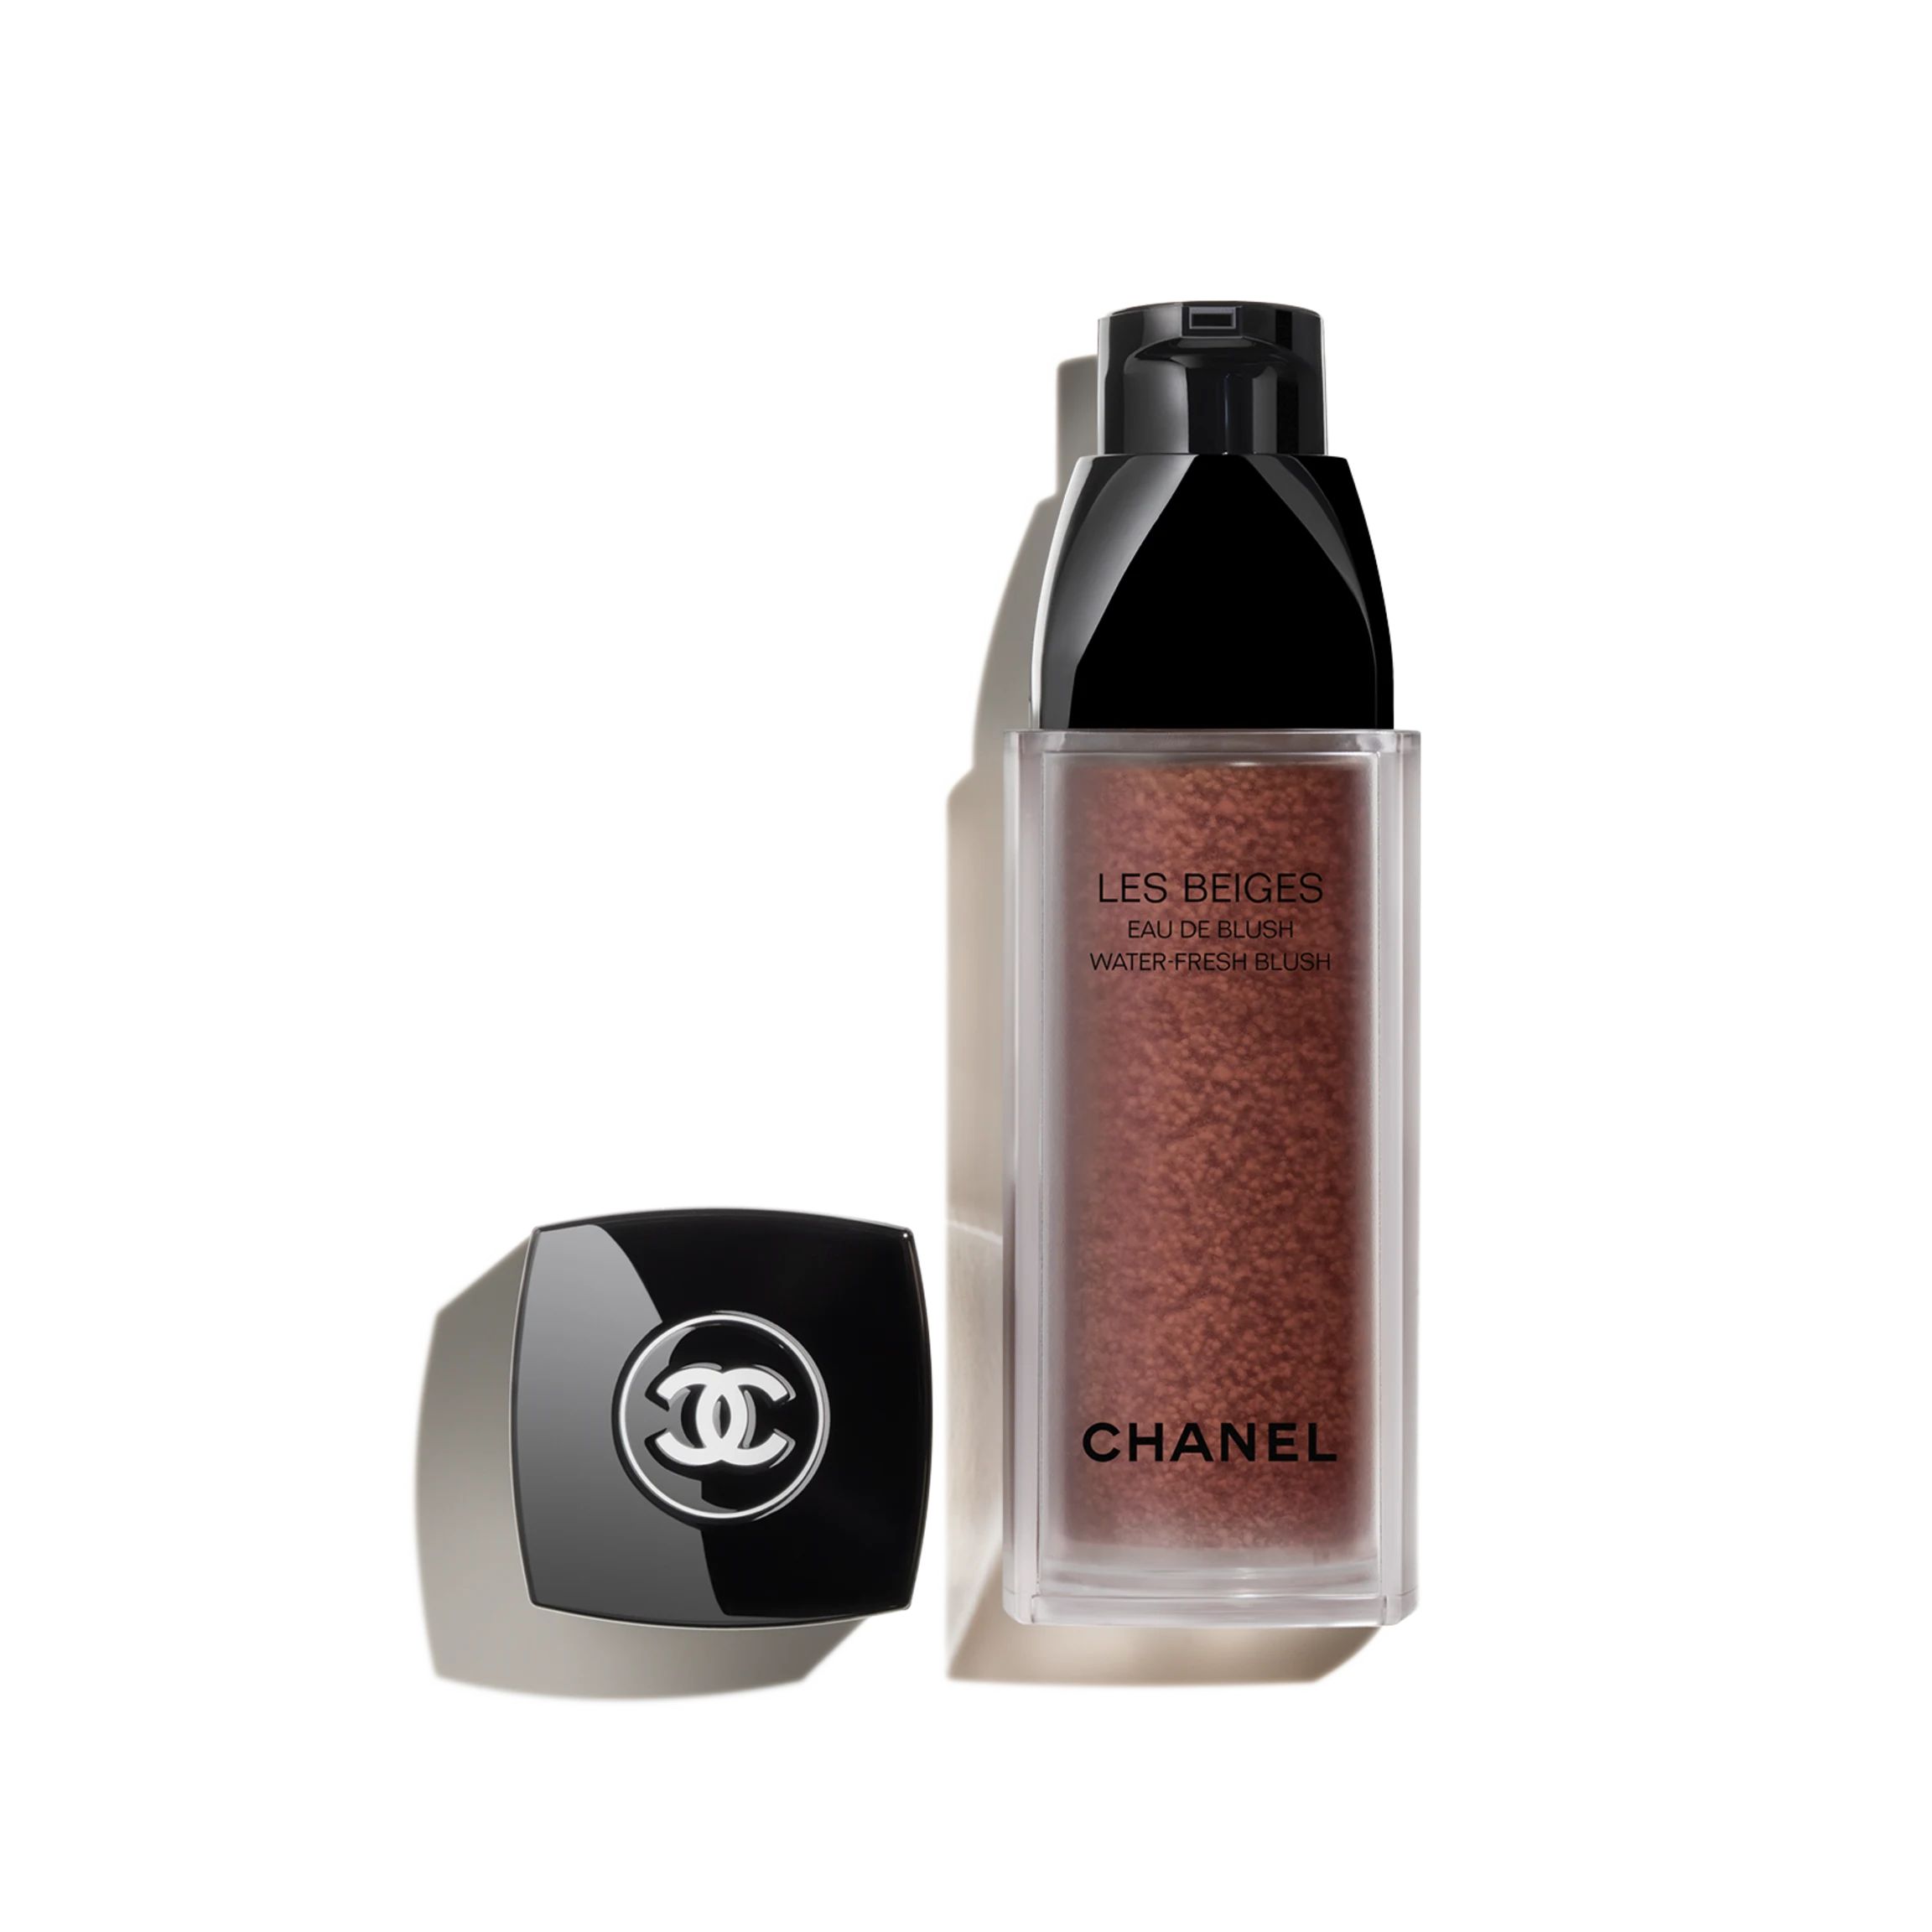 LES BEIGES Water-fresh blush Light peach | CHANEL | Chanel, Inc. (US)